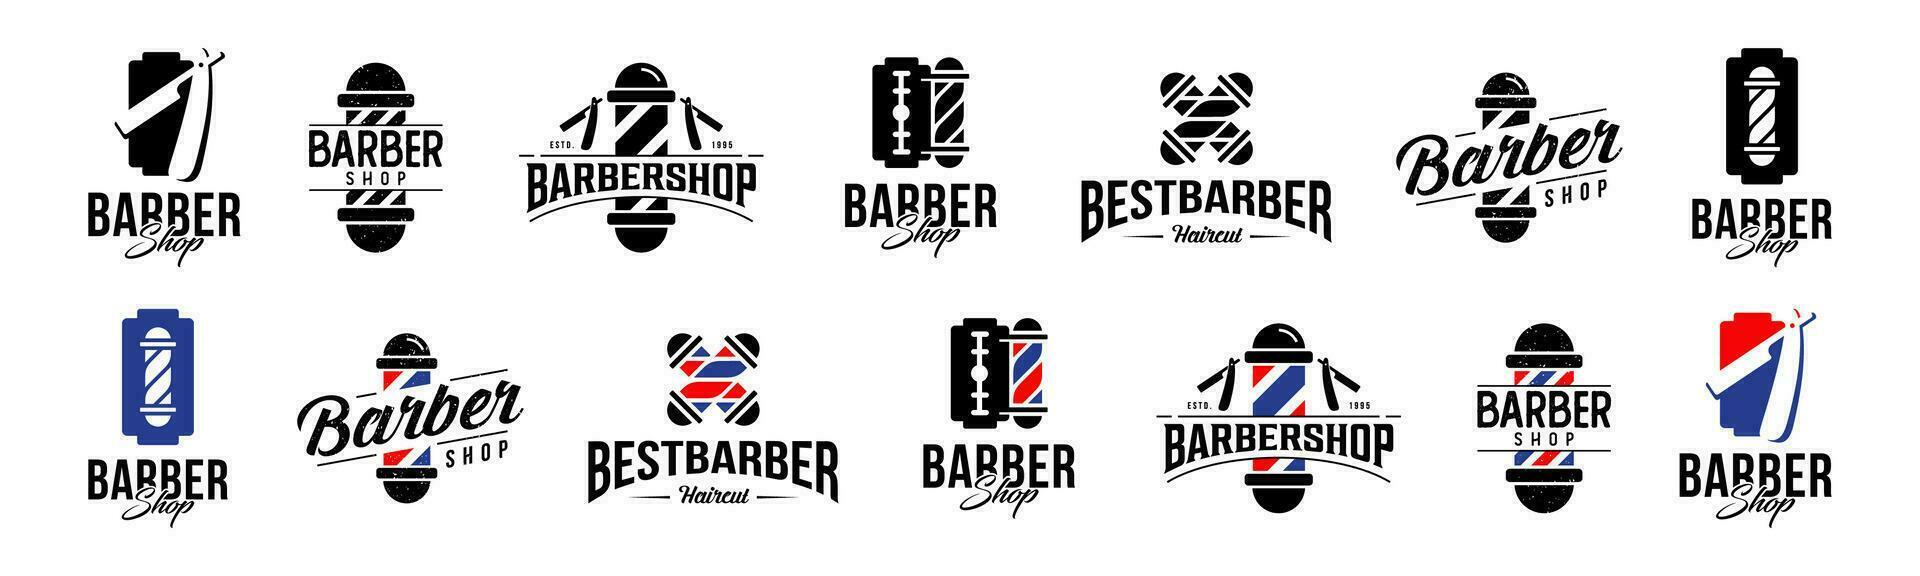 Barbershop logo design vector, editable and resizable EPS 10 vector